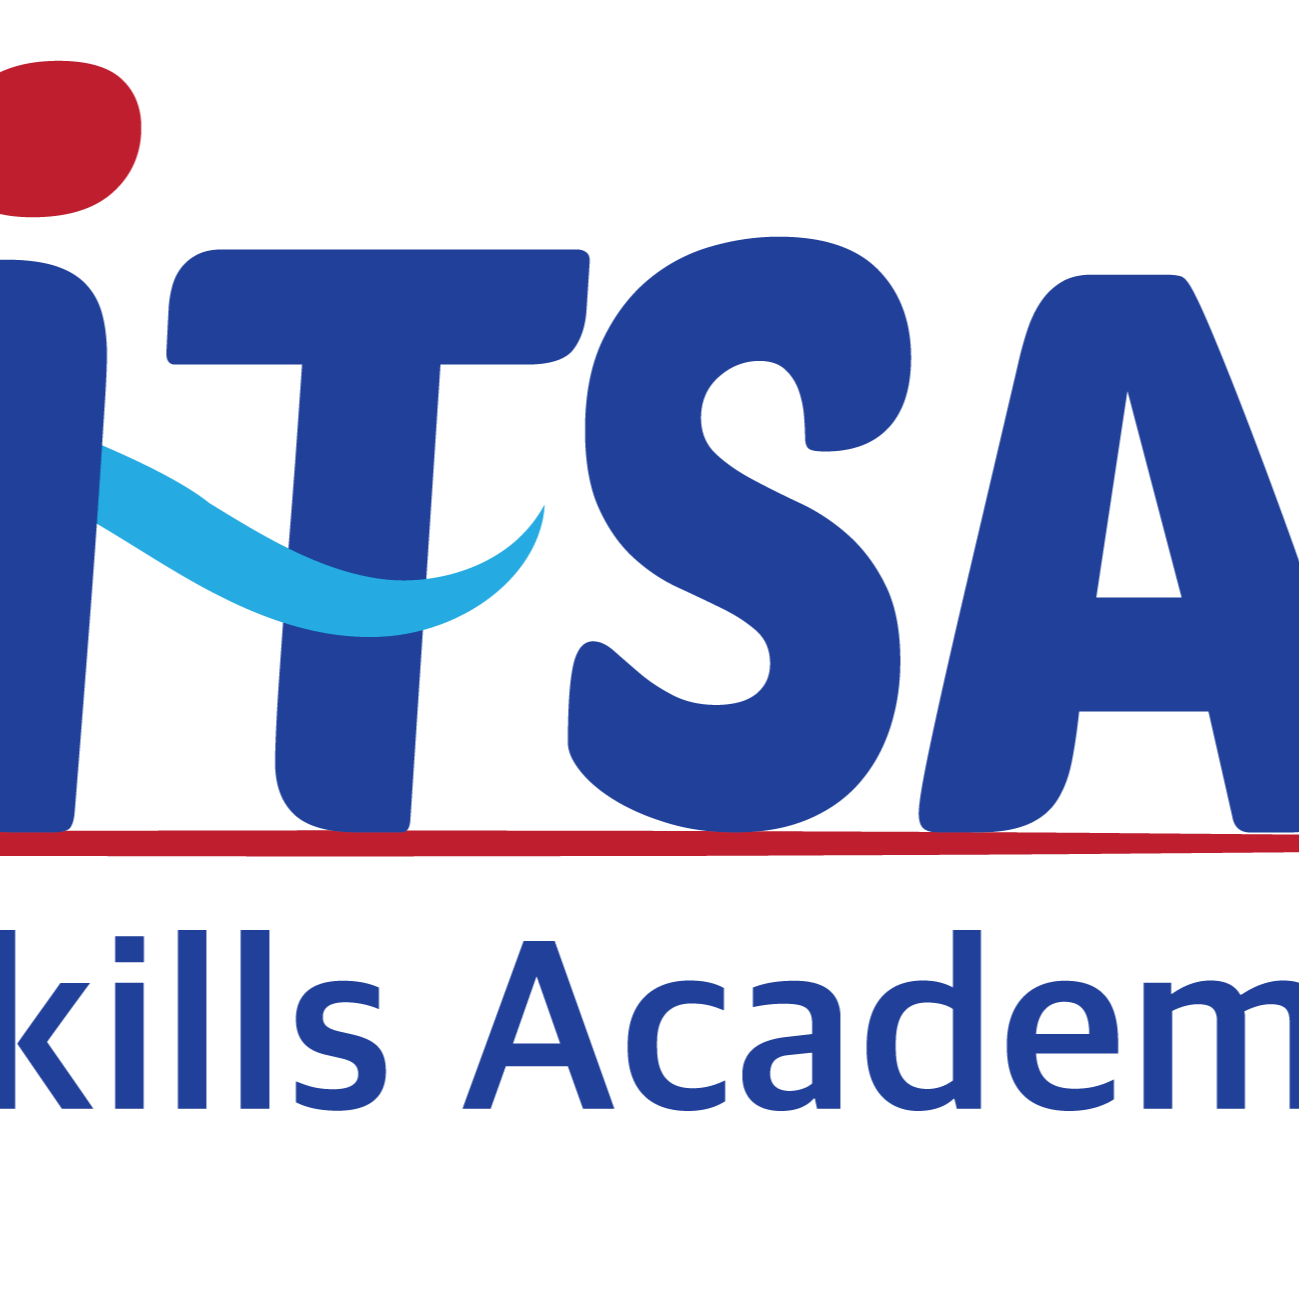 iTechSkills Academy Organization